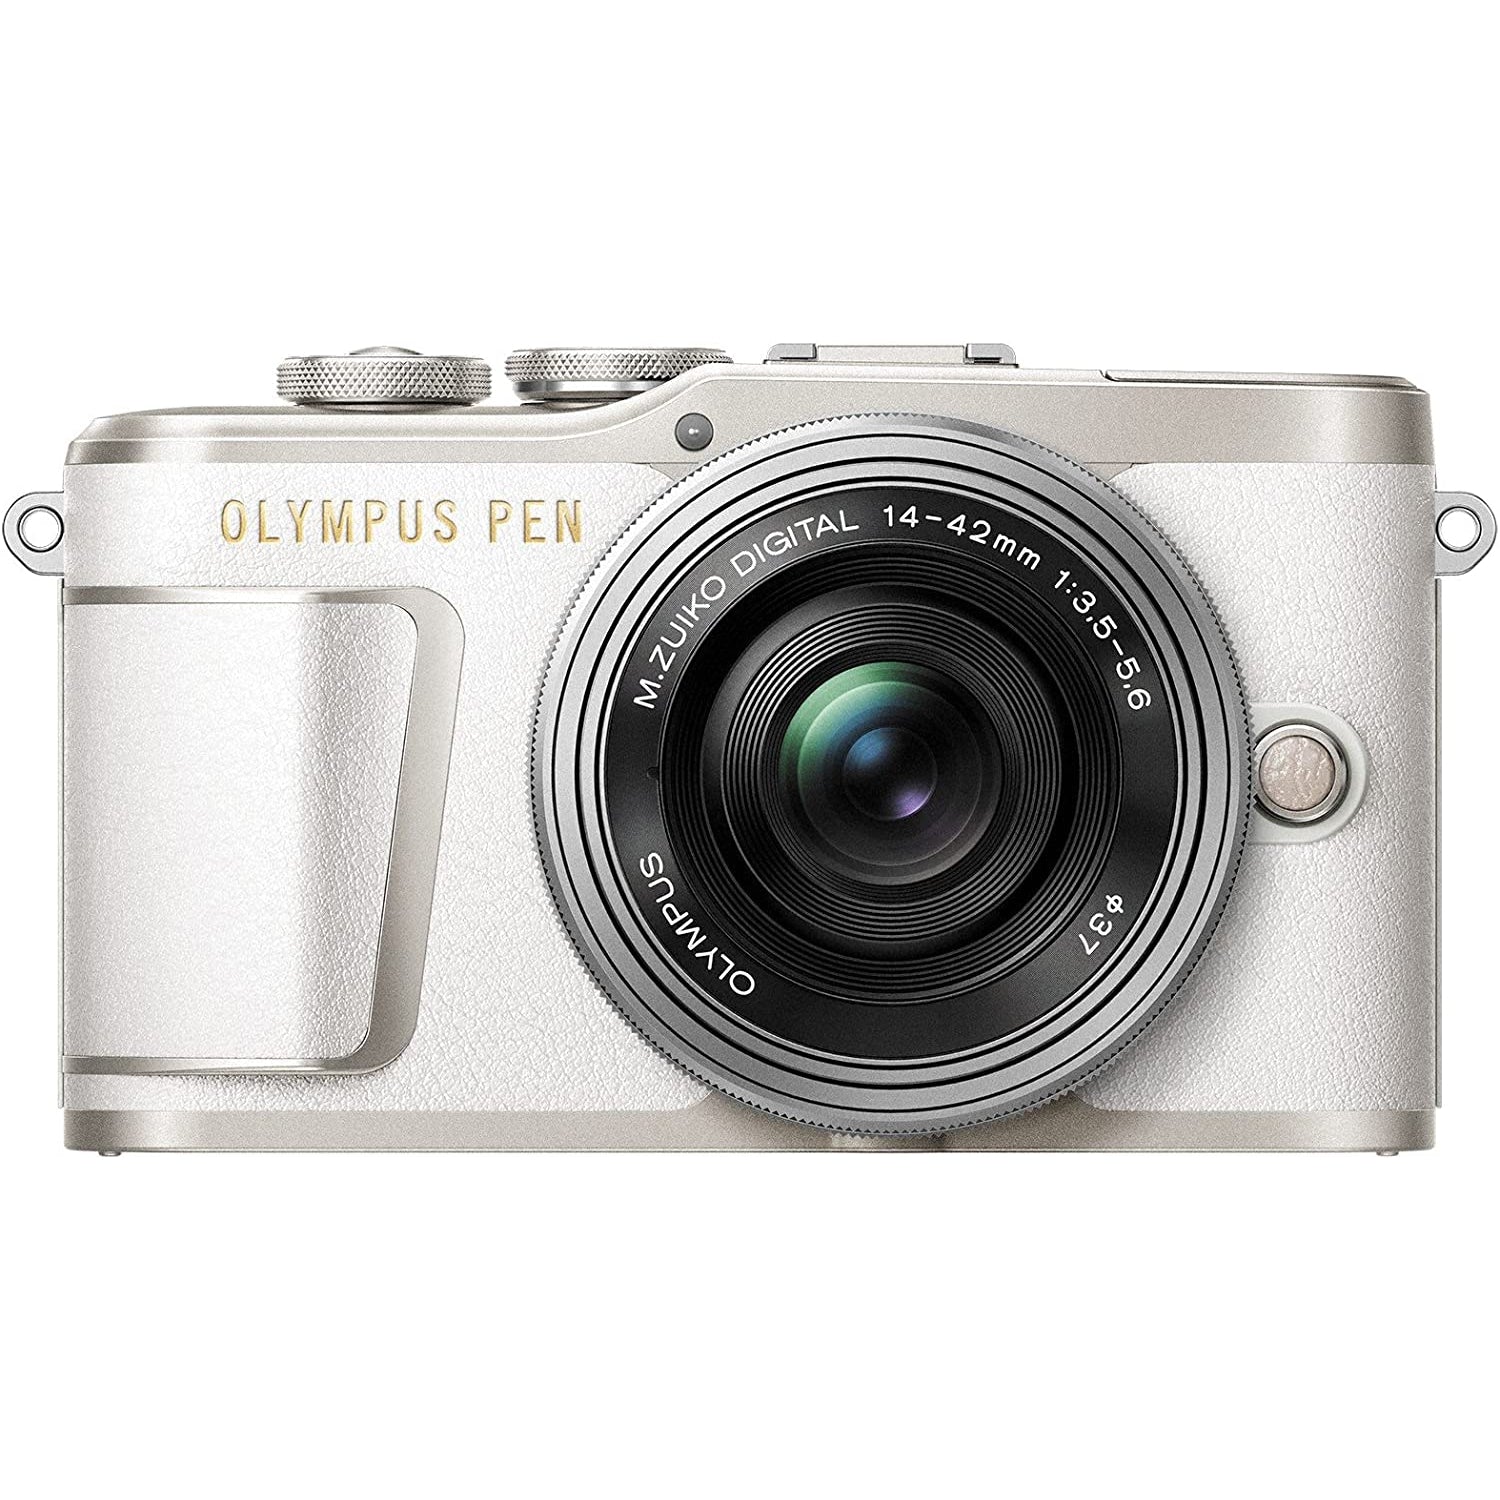 Olympus PEN E-PL9 Kit, Micro Four Thirds System Camera, 4-42 mm EZ Zoom Lens, White/Silver